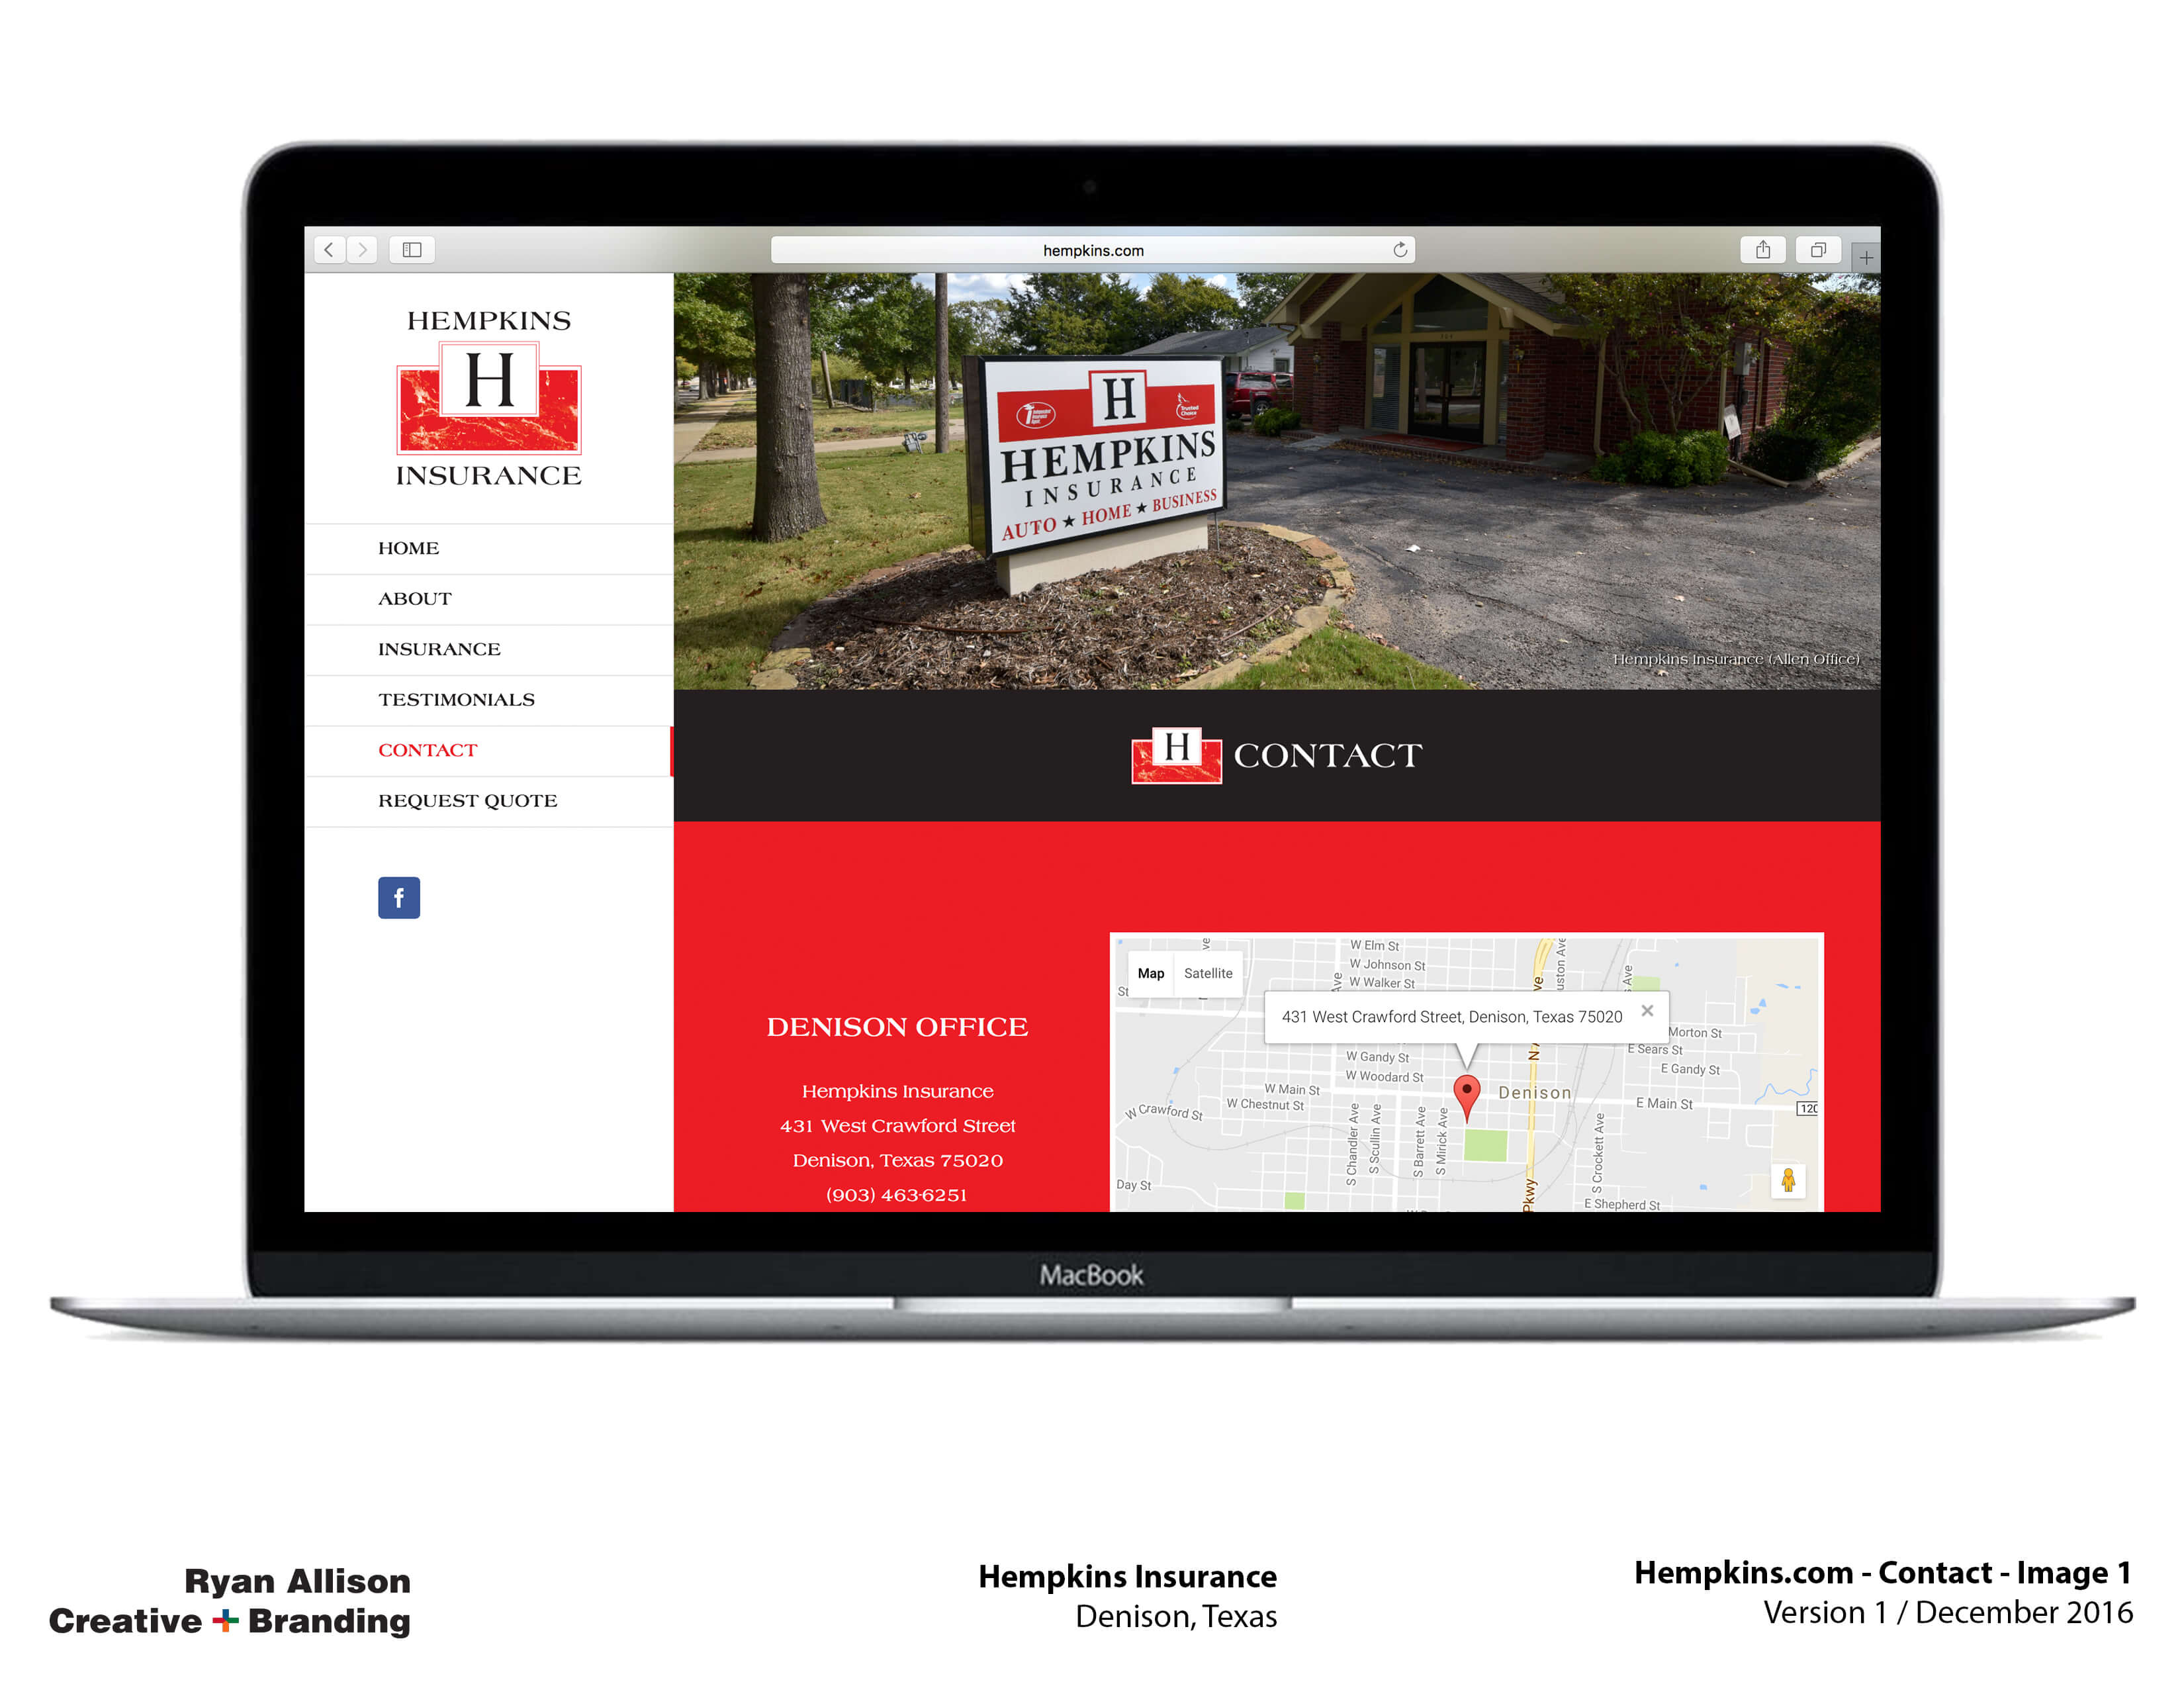 Hempkins Insurance Website Contact 1 - Project - Ryan Allison Creative + Branding